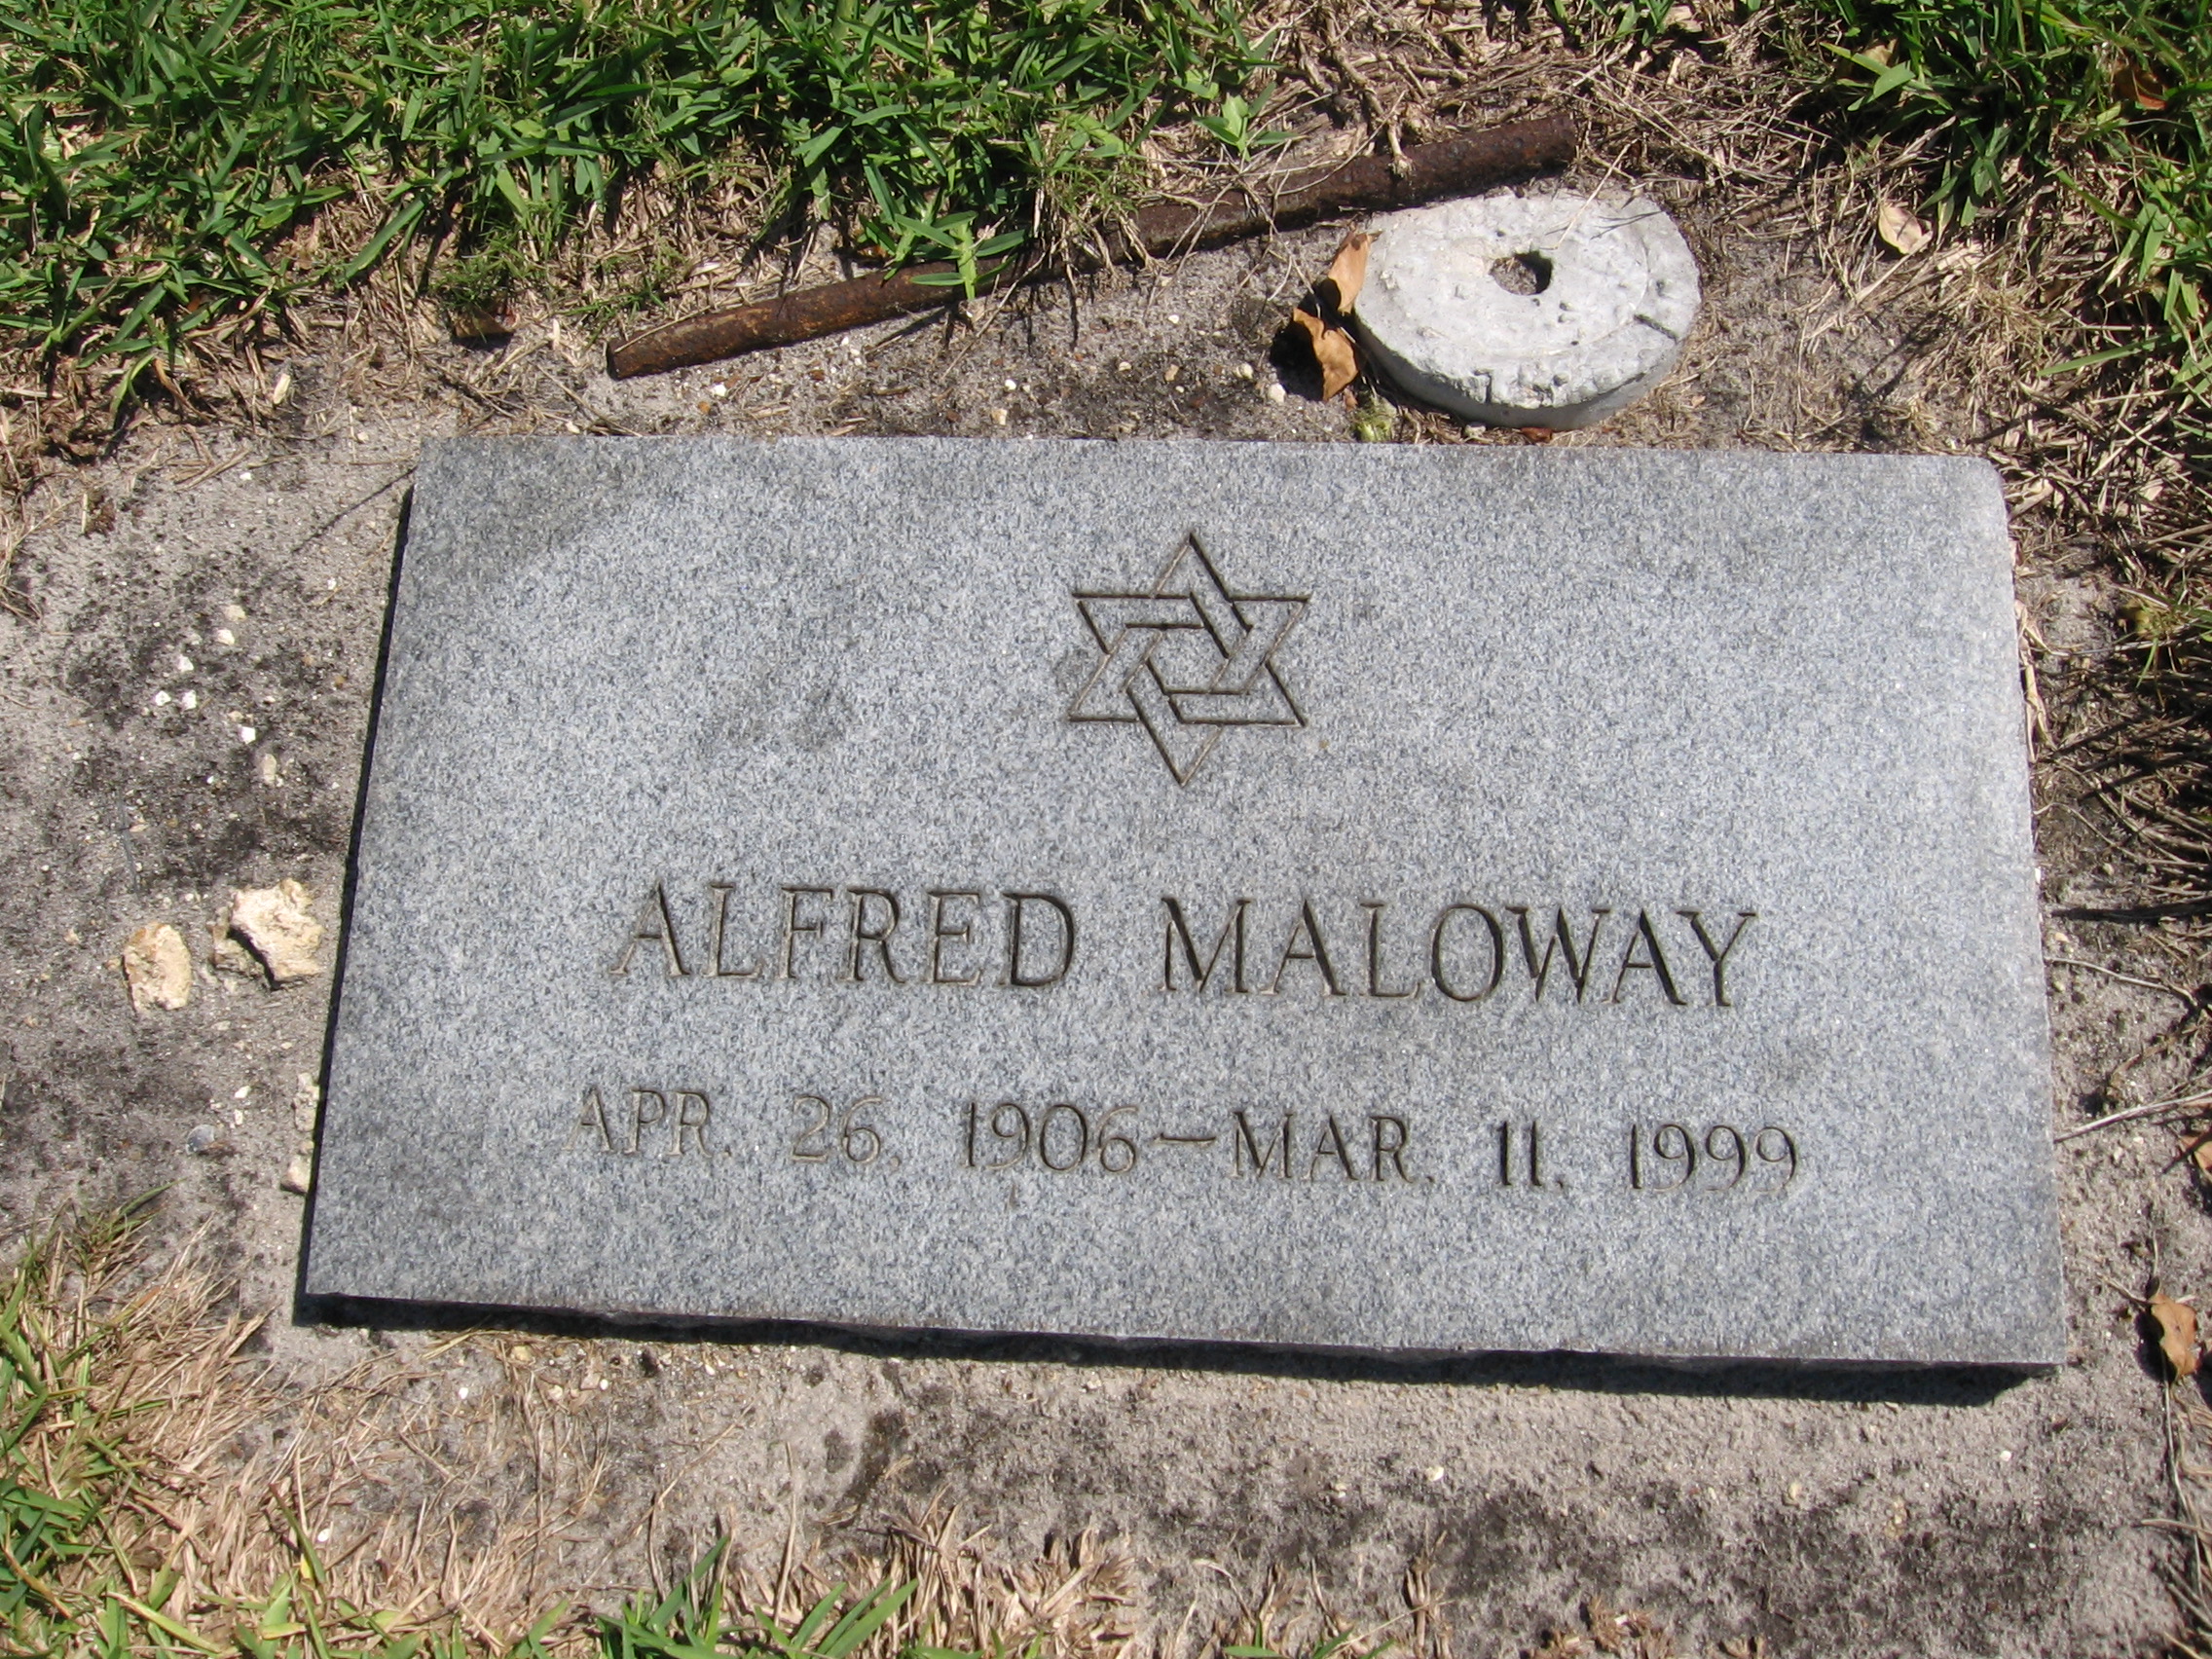 Alfred Maloway